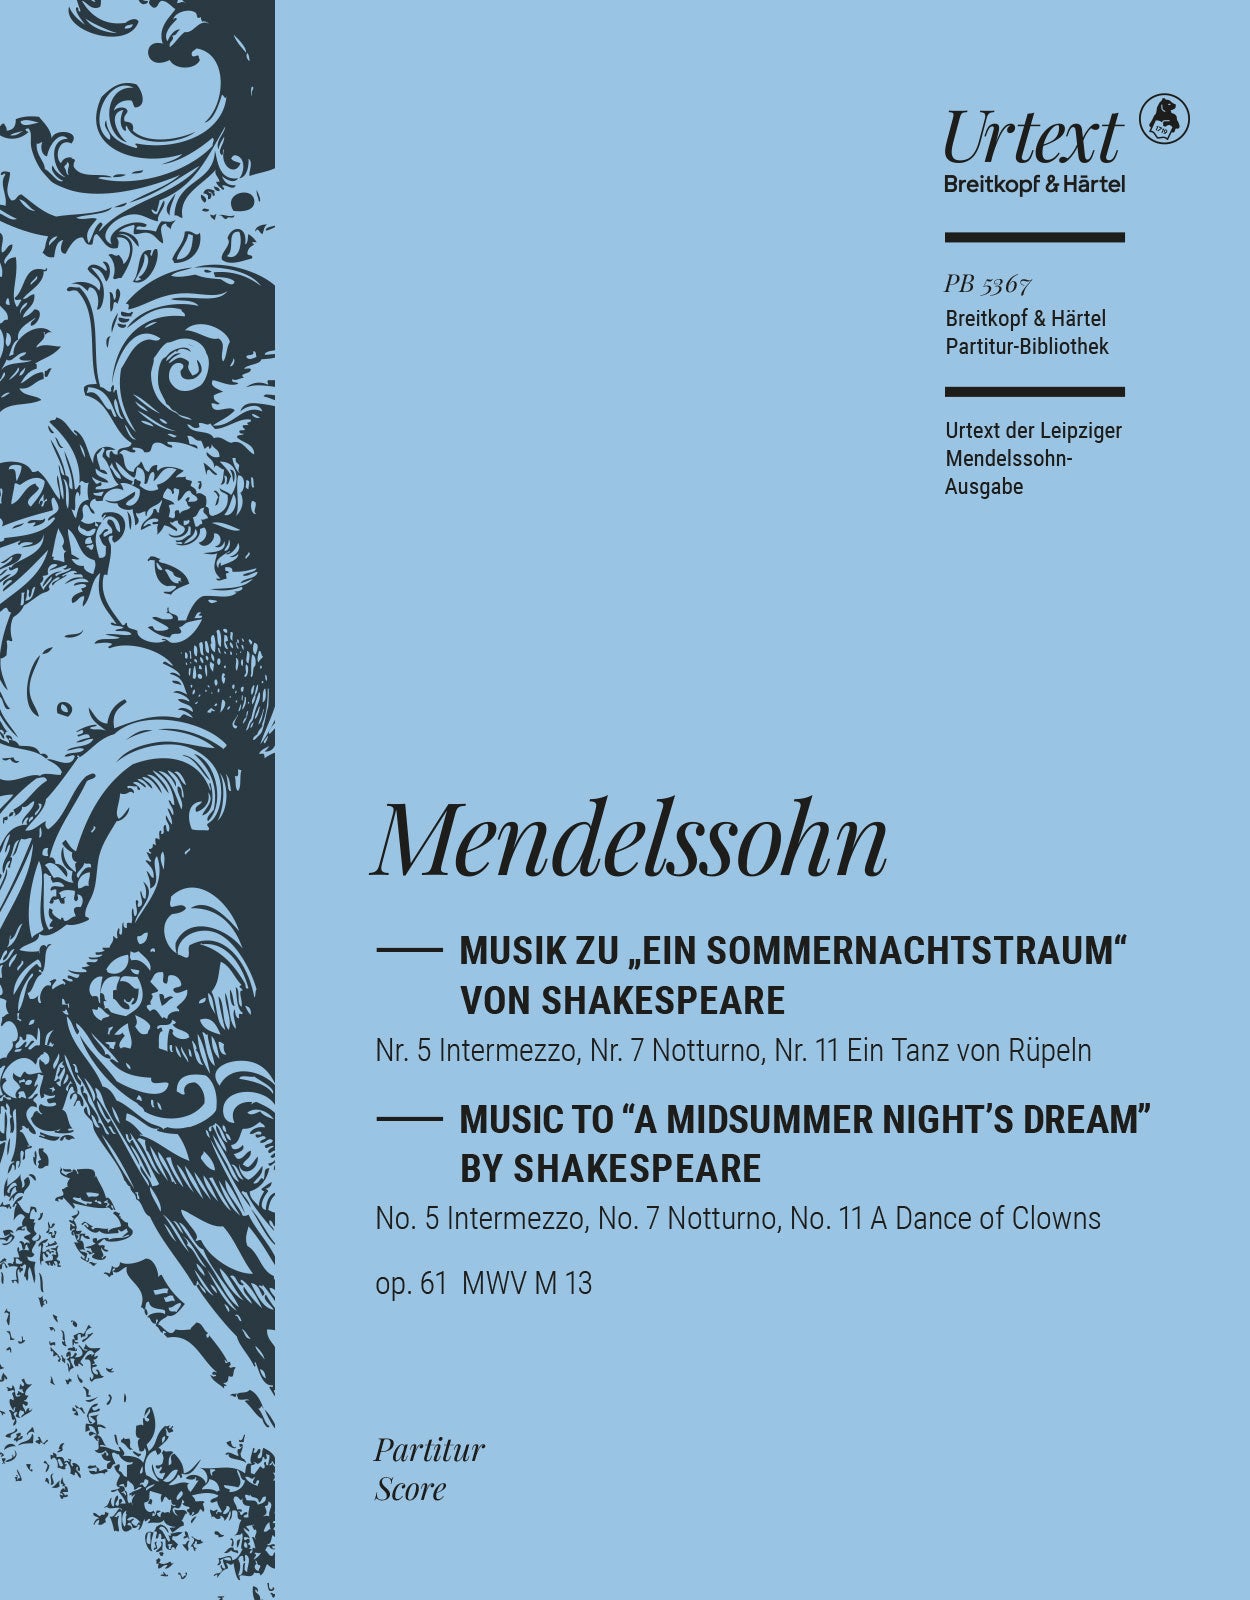 Mendelssohn: Intermezzo, Notturno and A Dance of Clowns from A Midsummer Night's Dream, MWV M 13, Op. 61